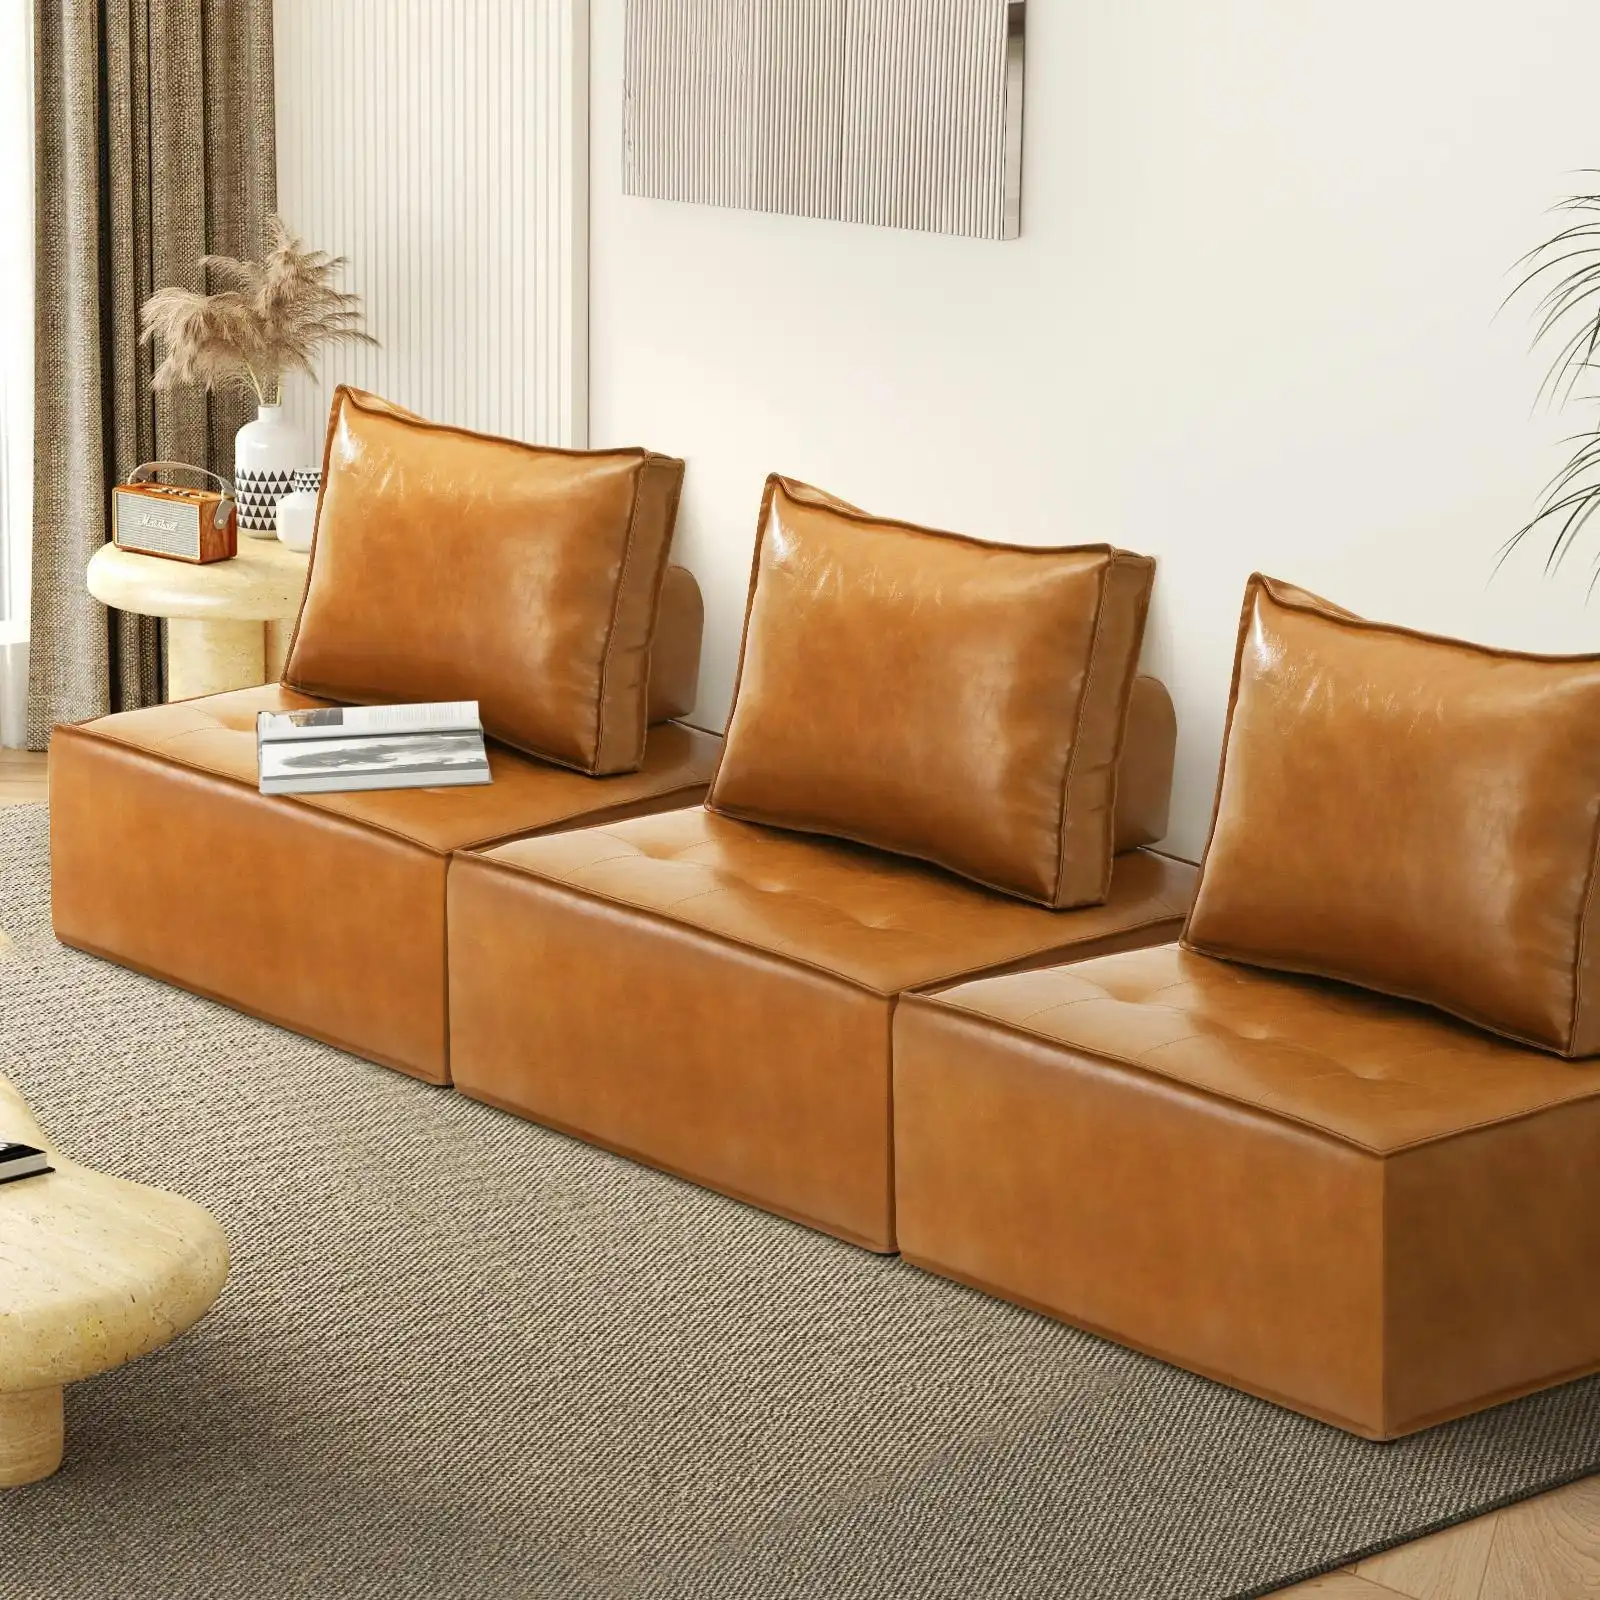 Oikiture 3PC Modular Sofa Lounge Chair Armless TOFU Back PU Leather Brown